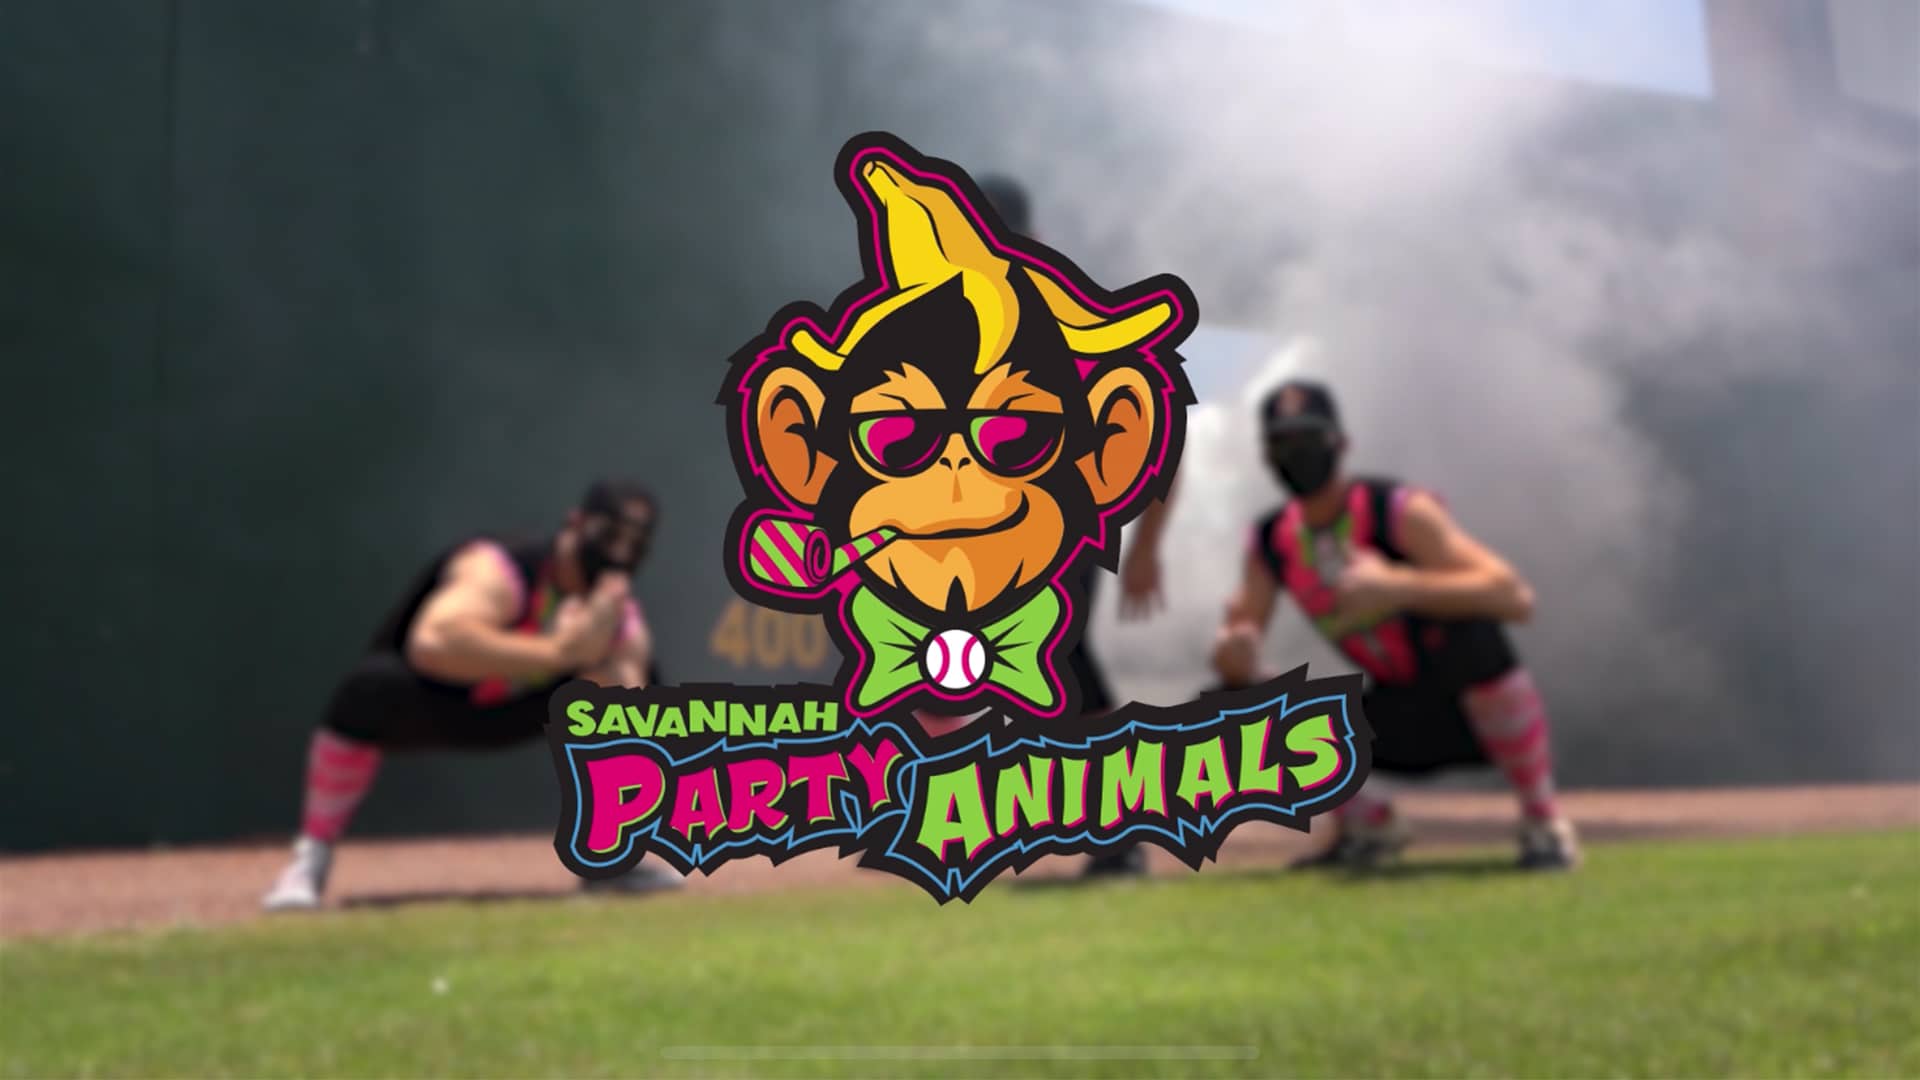 Savannah party animals